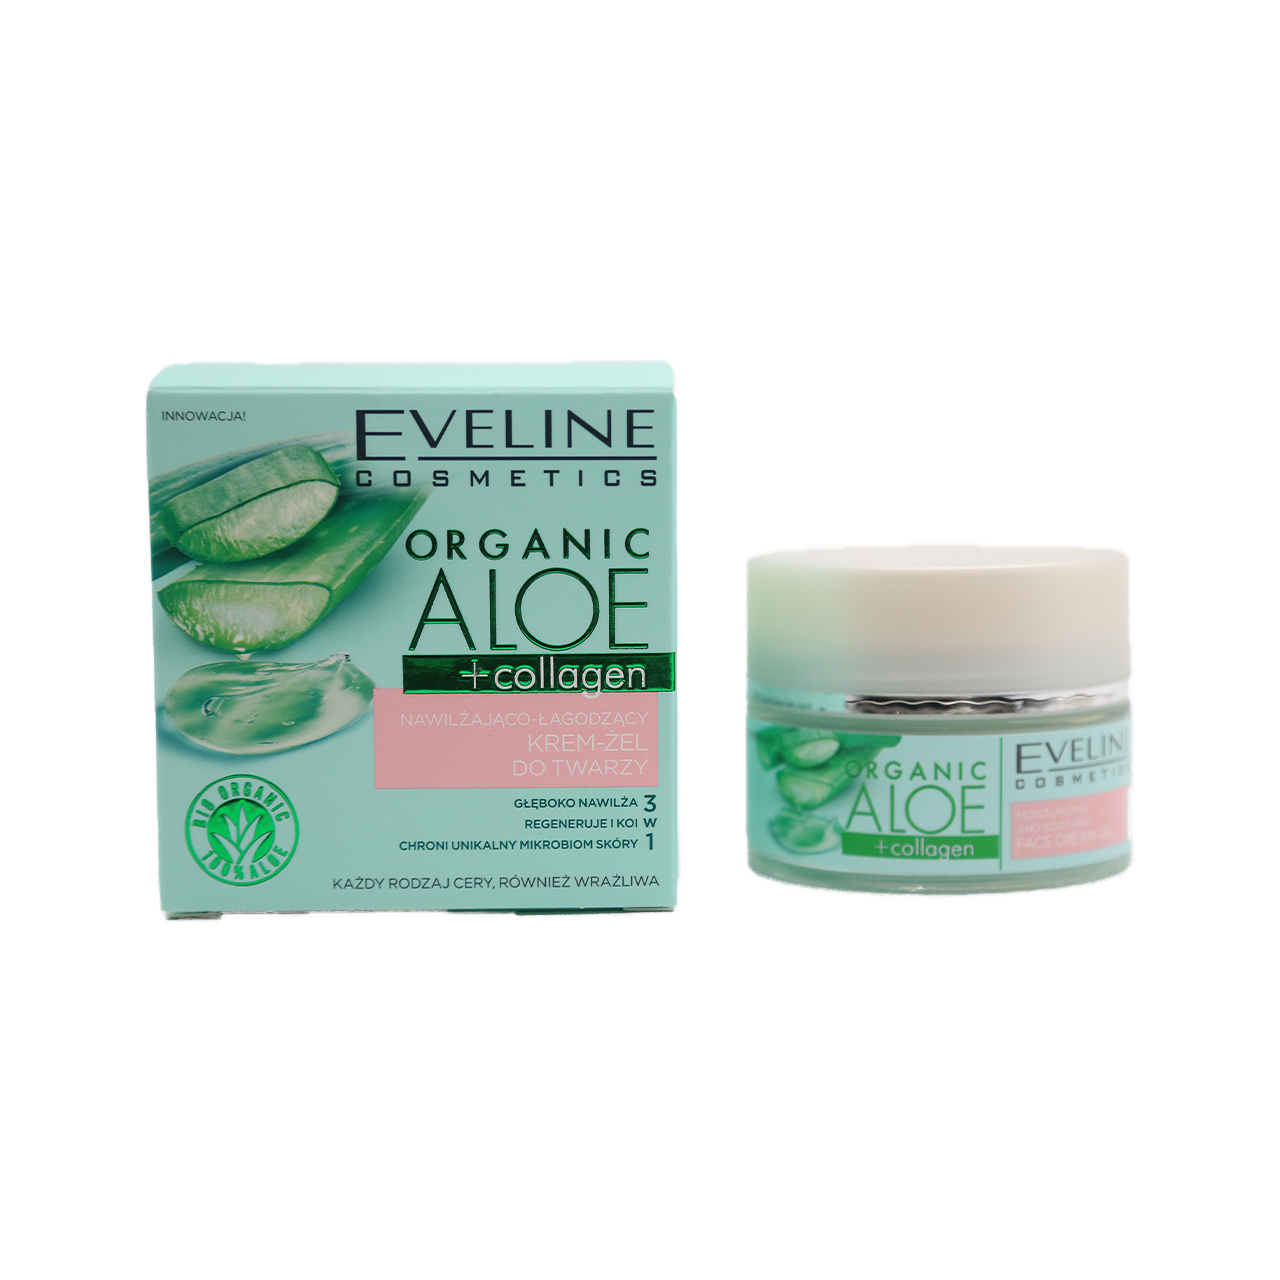 193-5903416027928-Eveline Cosmetics Organic Aloe + Collagen Moisturizing and Mattifying Face Gel 50ml